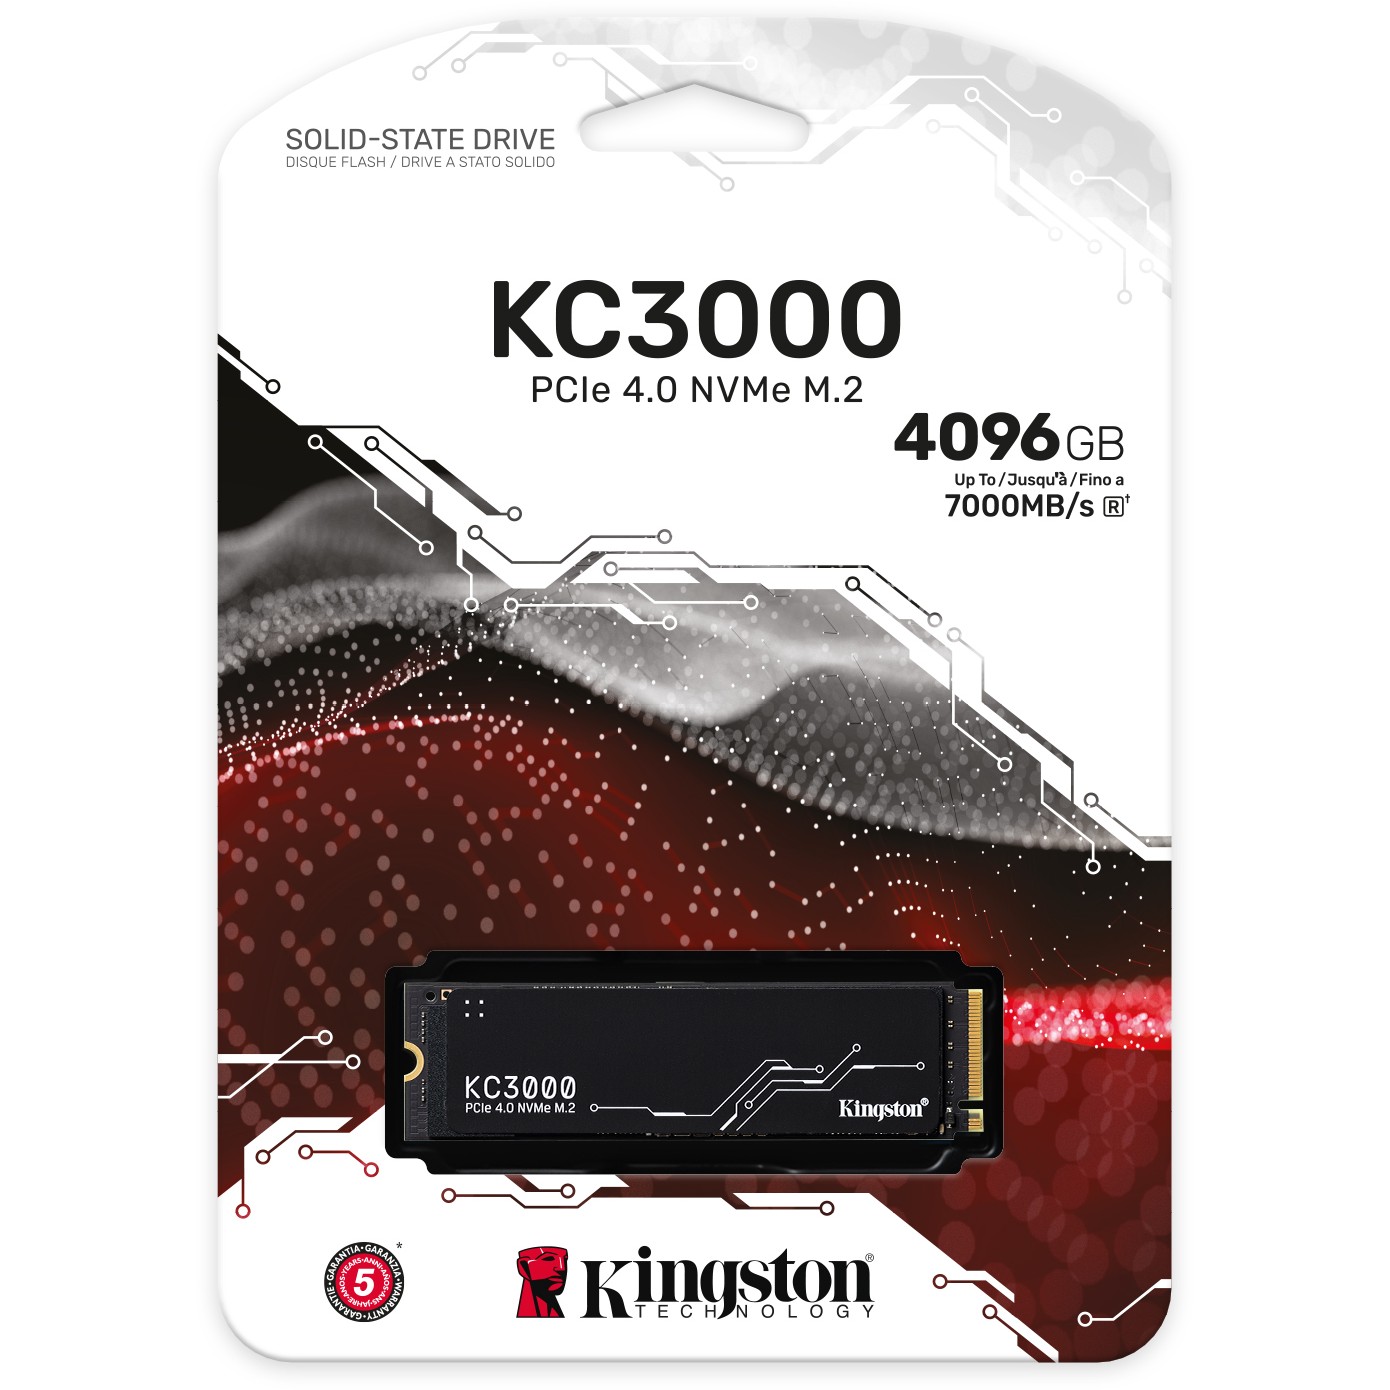 Kingston SKC3000D/4096G, Interne SSDs, Kingston KC3000  (BILD6)